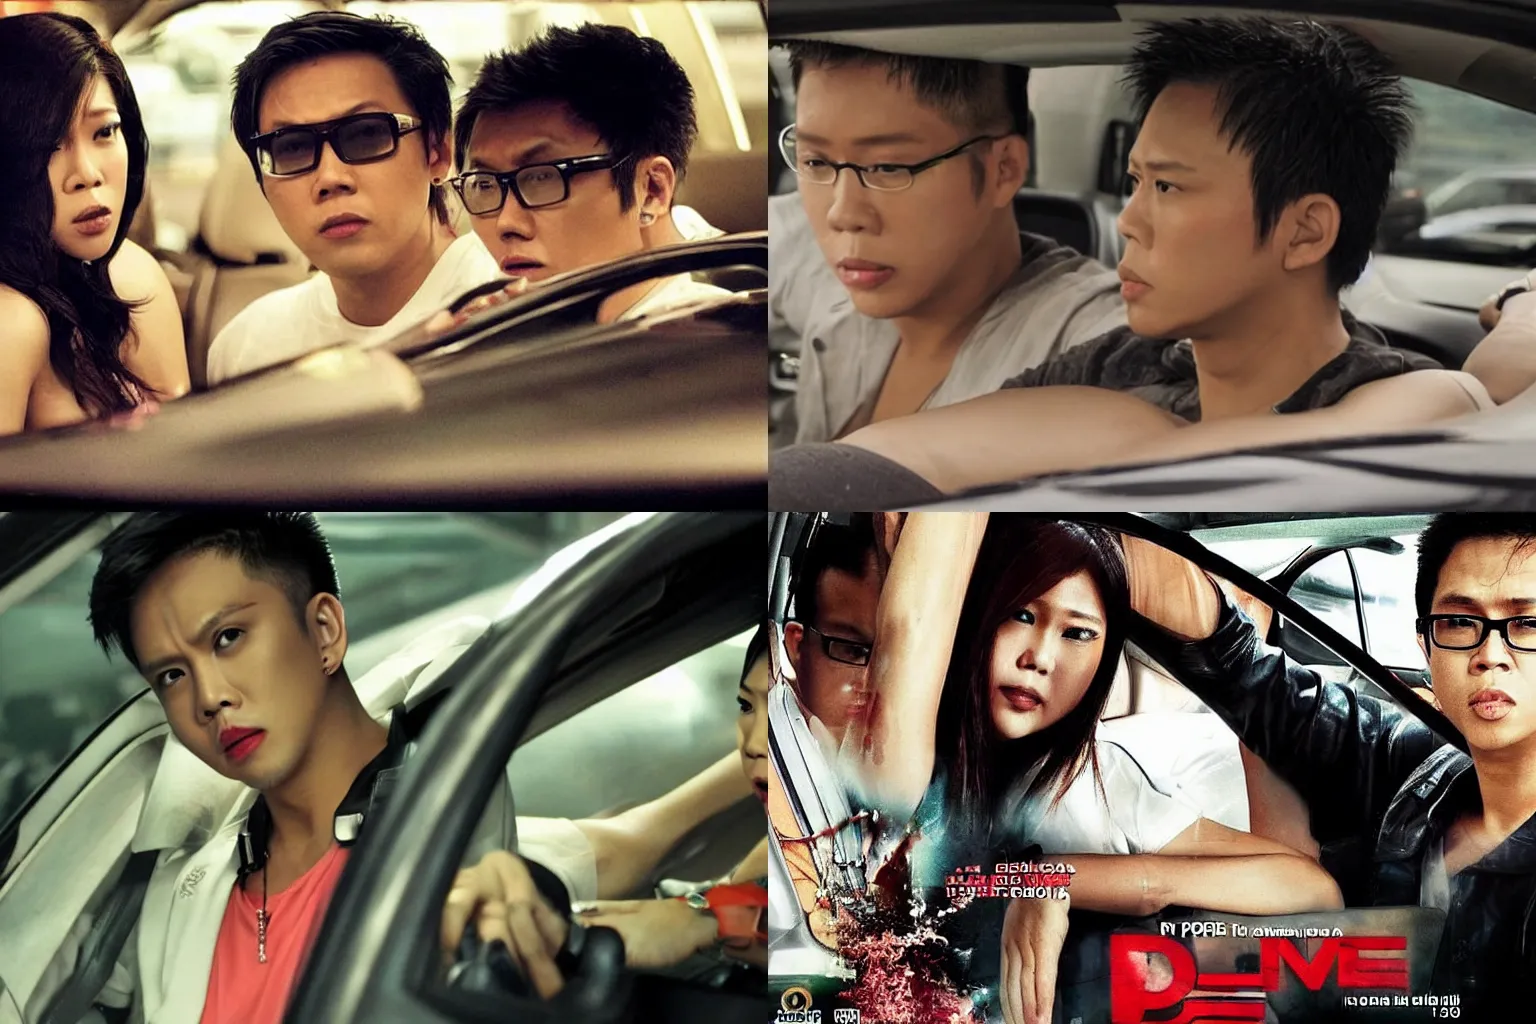 Prompt: a filipino remake of drive (2011) with vice ganda as driver, film still, dramatic lighting, metro manila,